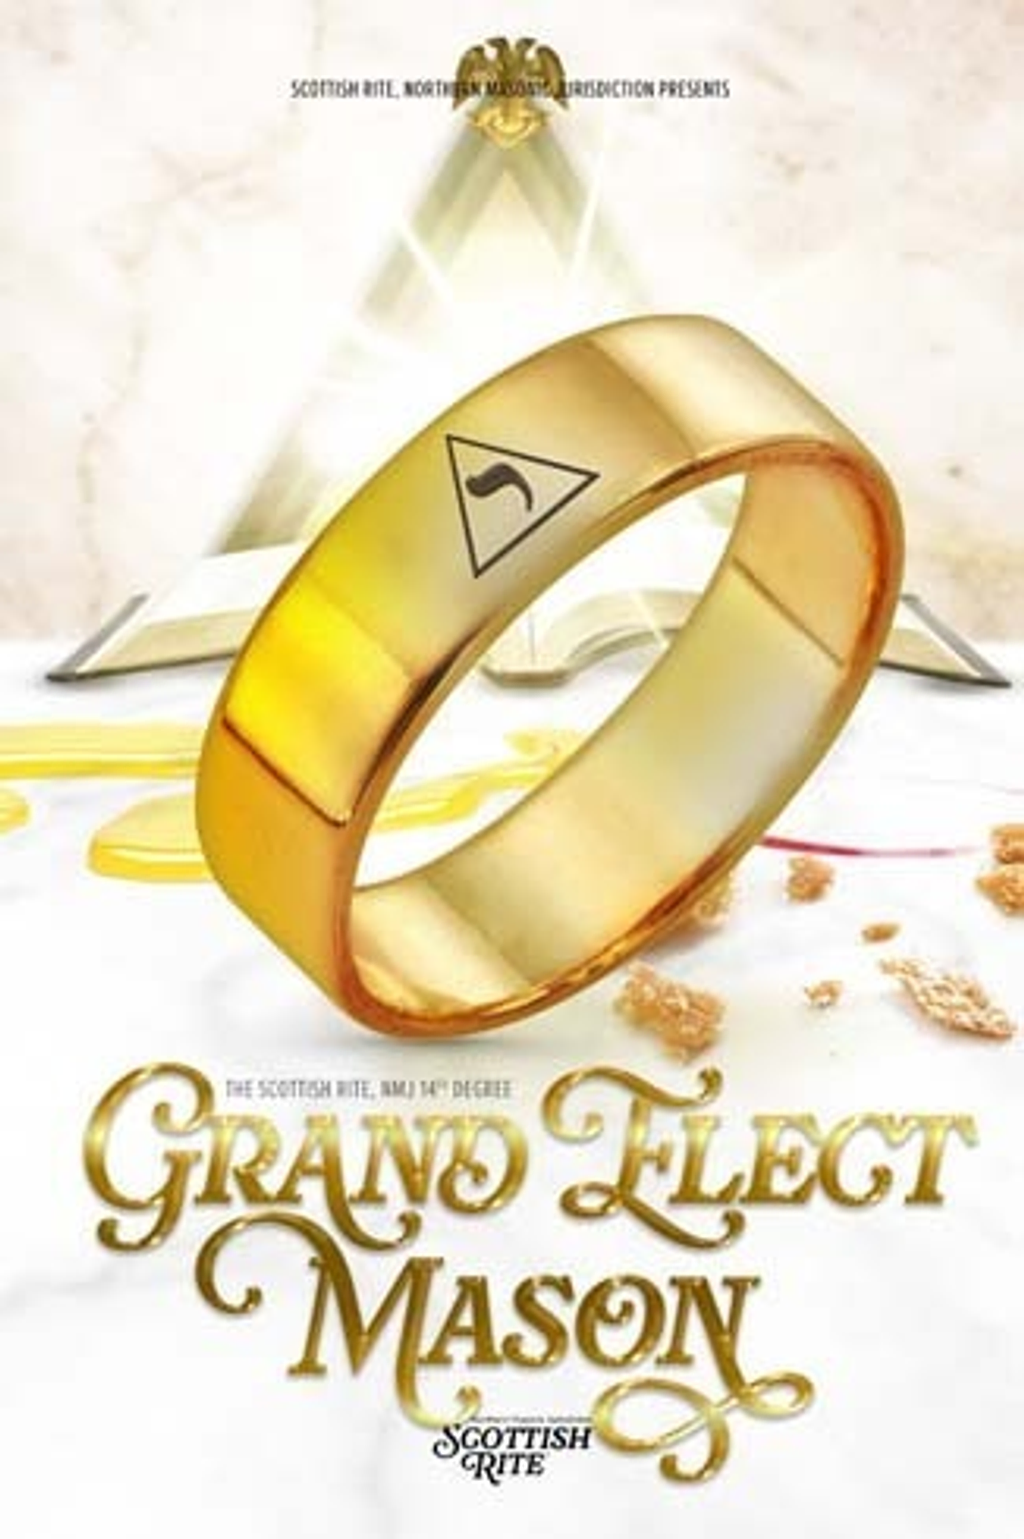 Scottish Rite, NMJ 14th Degree: Grand Elect Mason poster